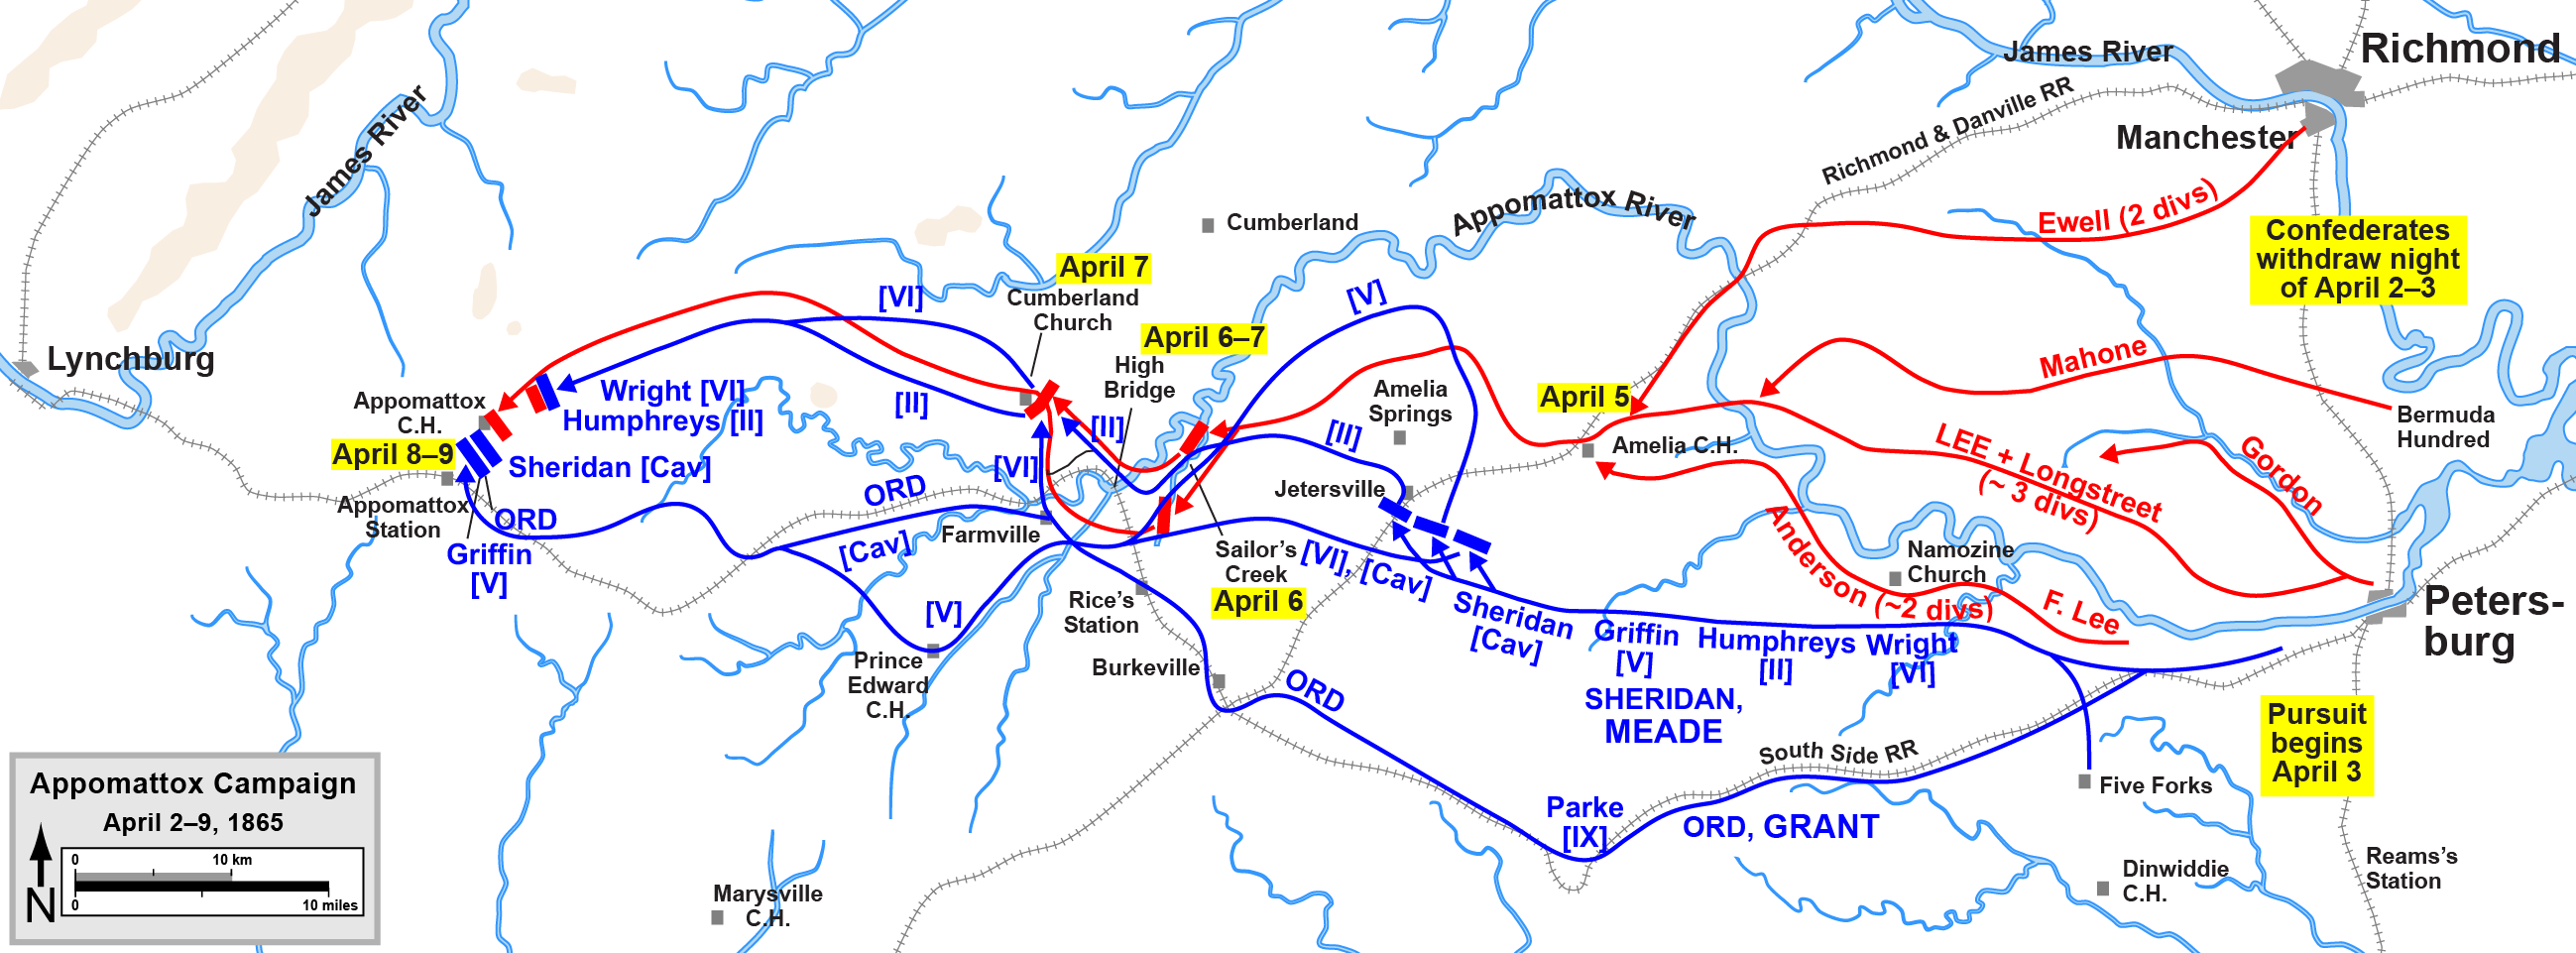 Lee's retreat and Grant's pursuit in the Appomattox Campaign, April 2–9, 1865.